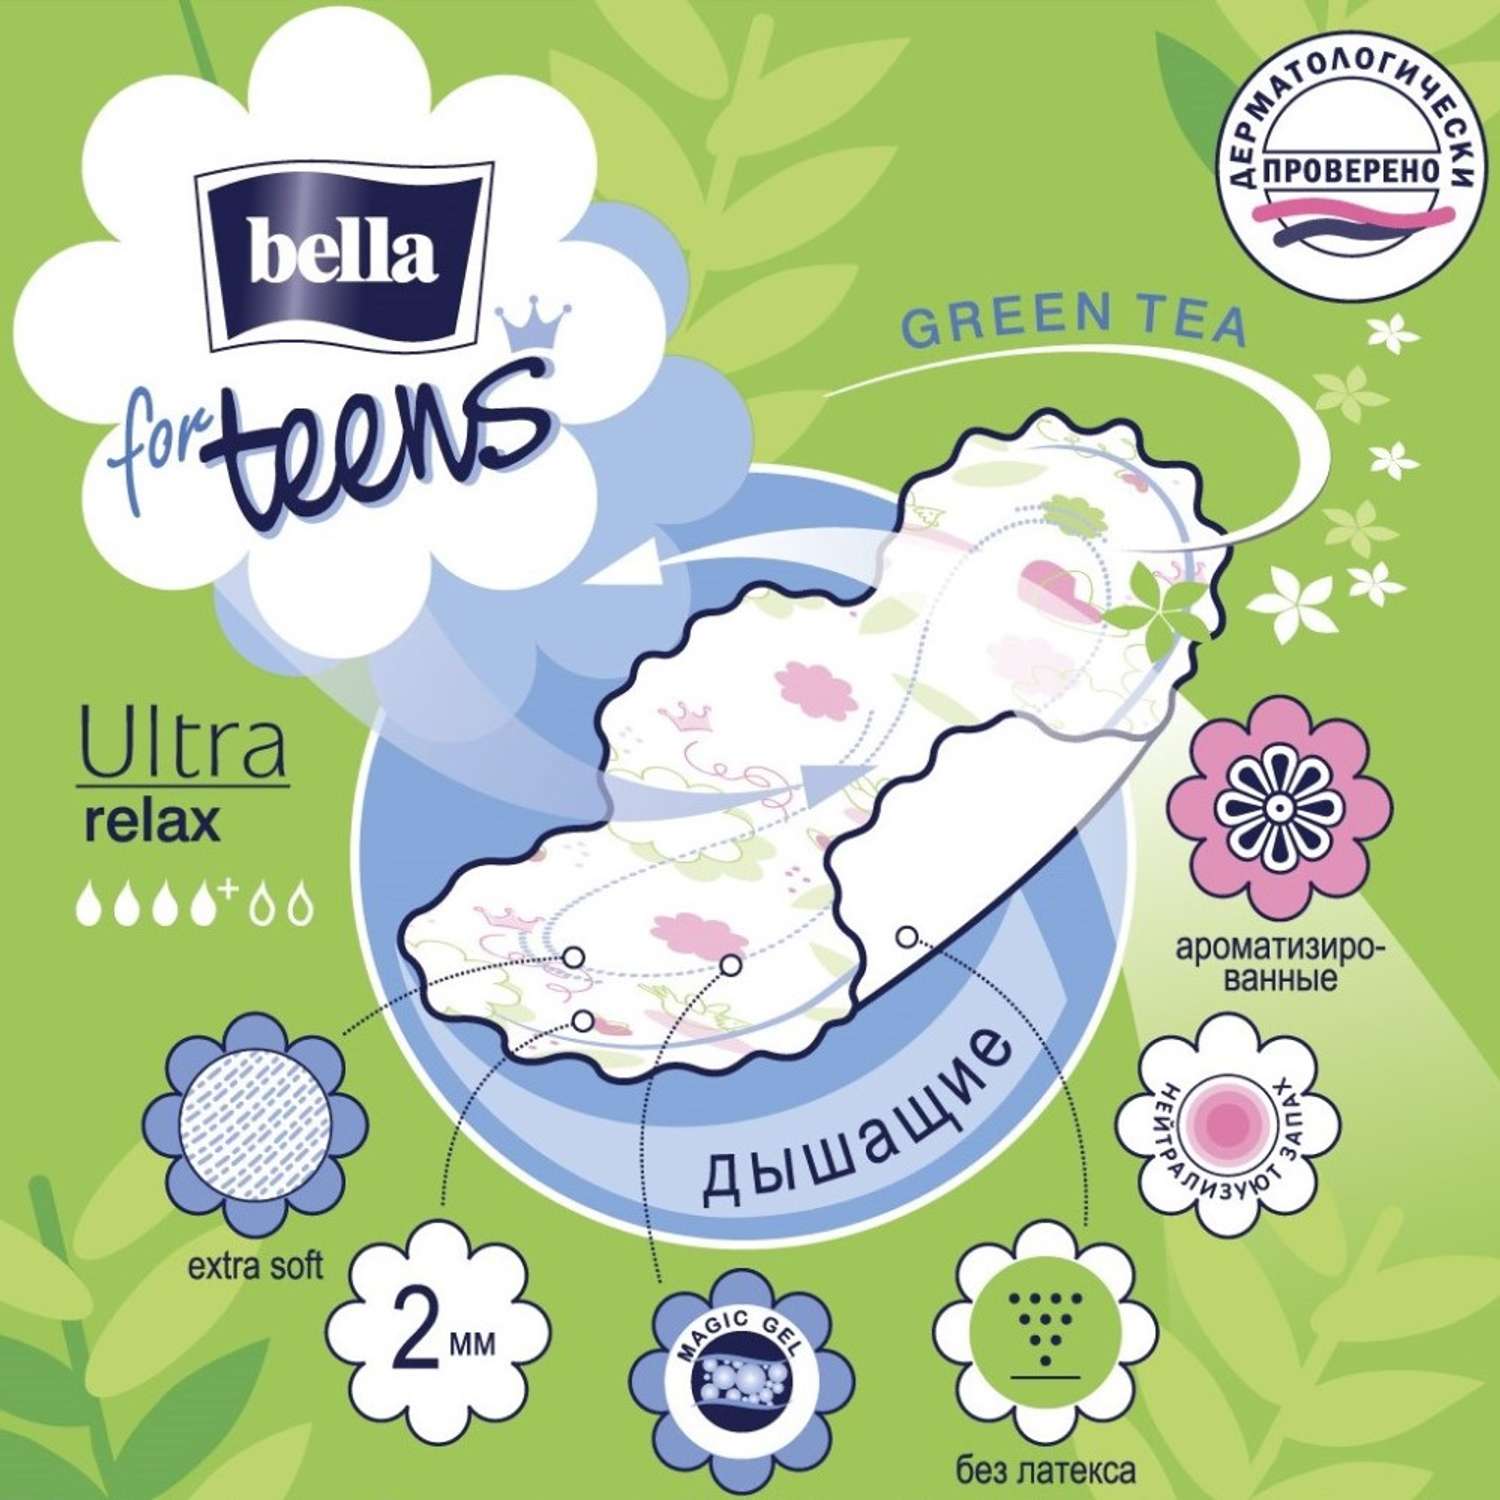 Прокладки супертонкие BELLA for teens Ultra relax 10 шт х 4 упаковки - фото 2